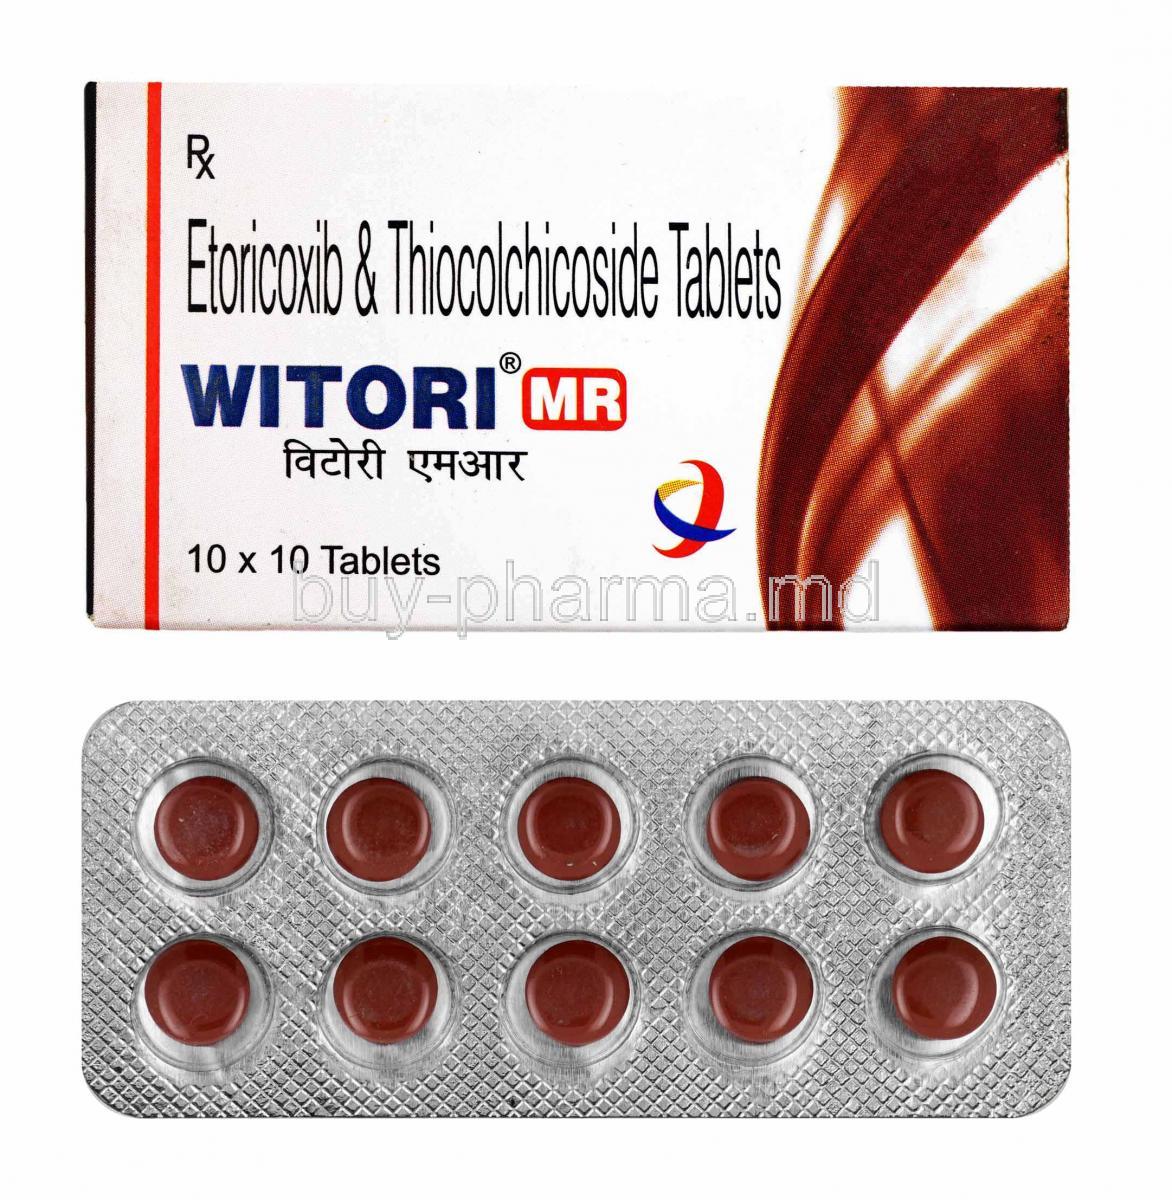 Witori MR, Etoricoxib and Thiocolchicoside box and tablets